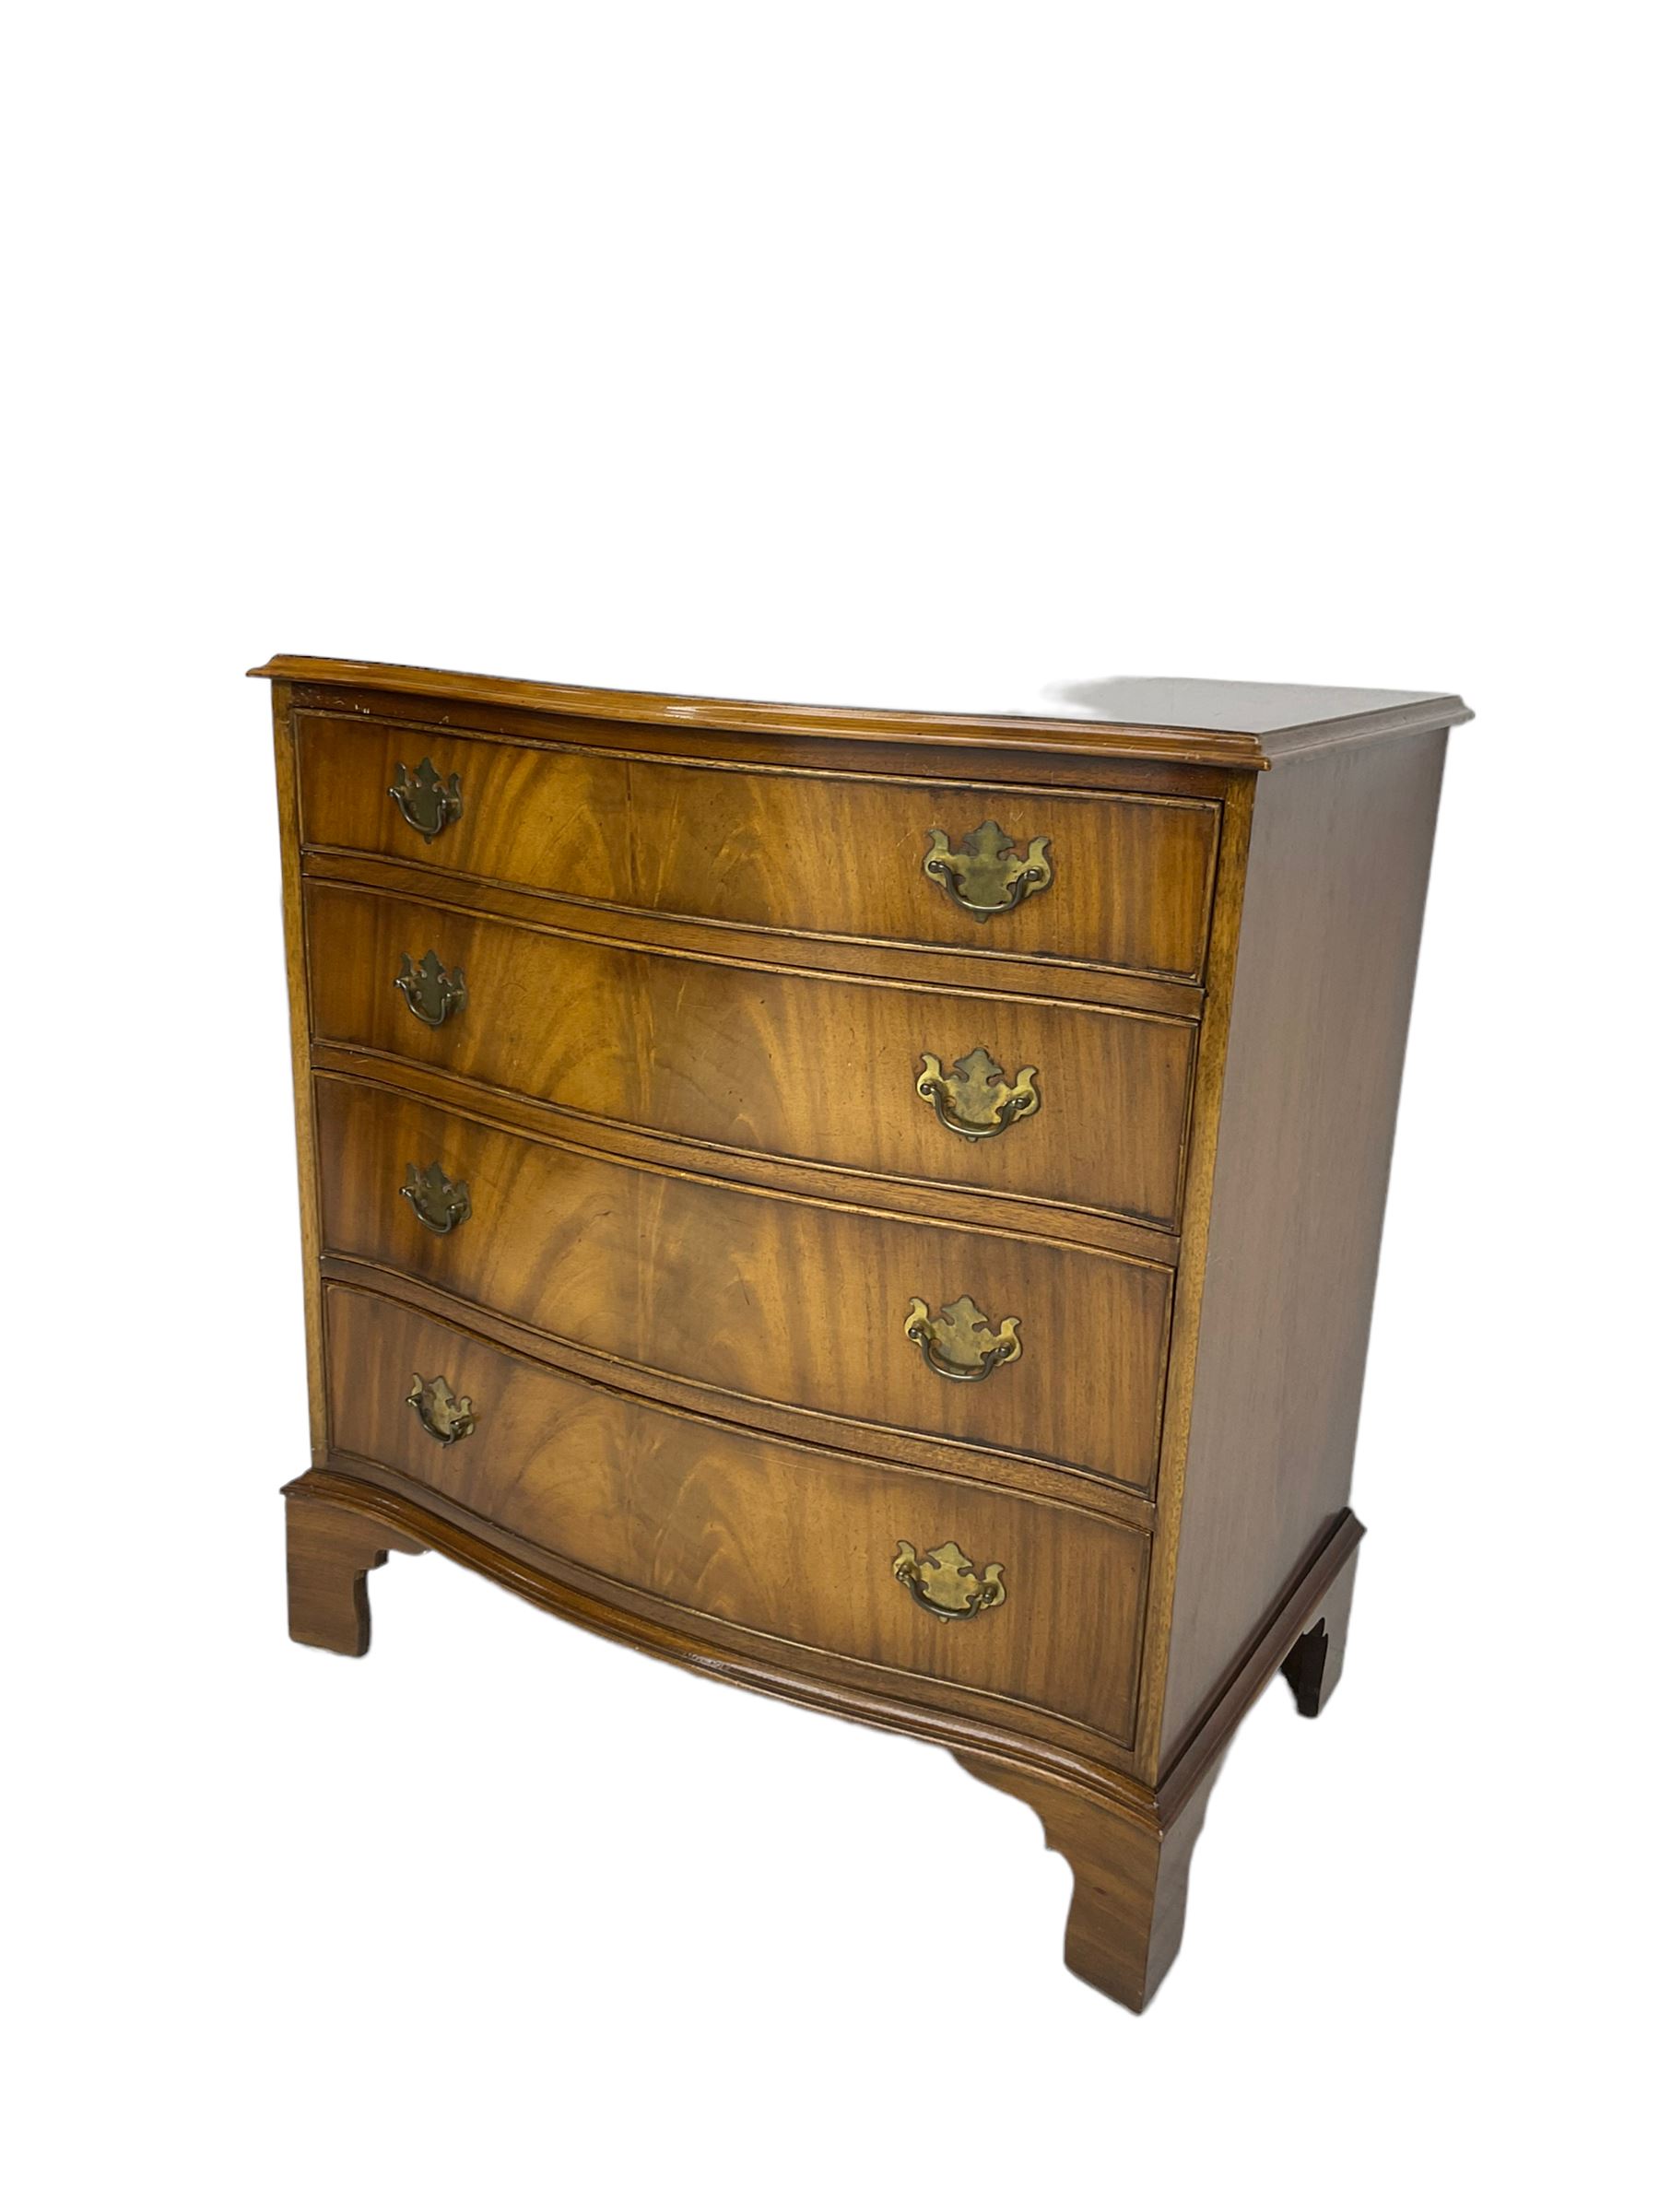 Georgian design mahogany serpentine drawer chest - Image 4 of 7